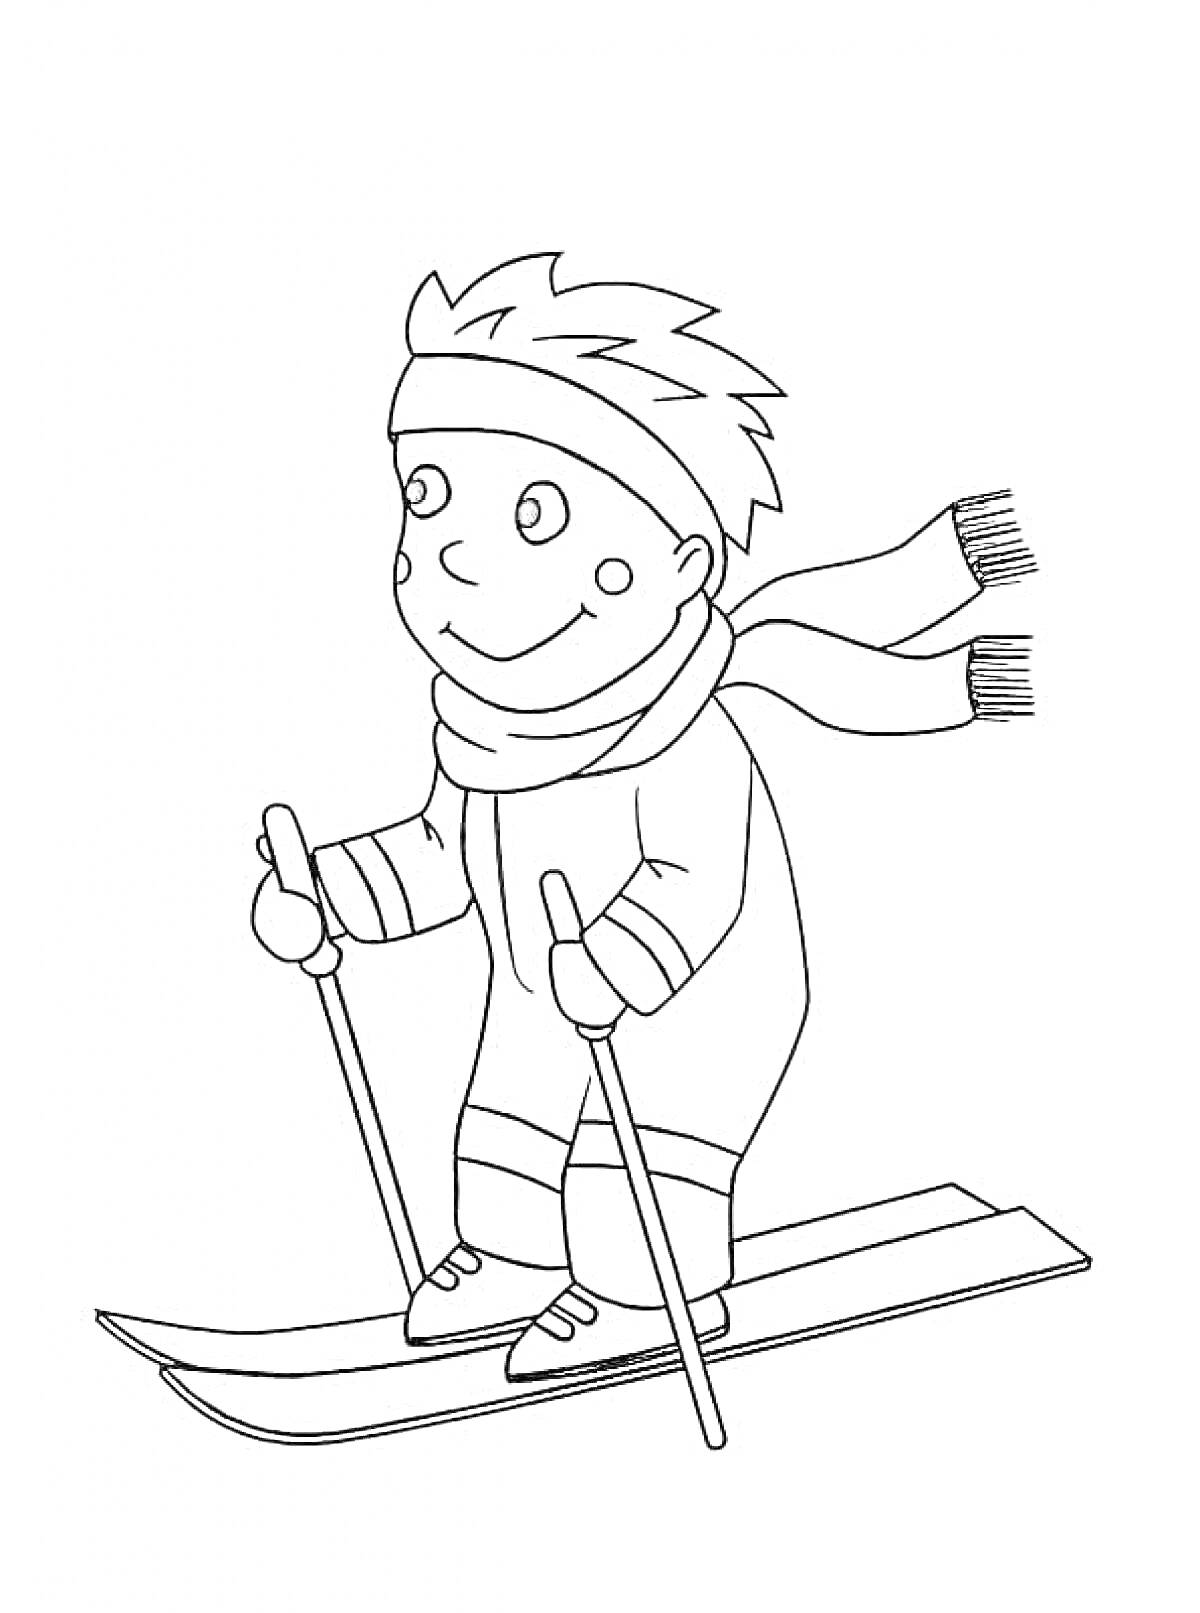 На раскраске изображено: Лыжник, Зимняя одежда, Шарф, Лыжи, Палки, Ребенок, Зима, Спорт